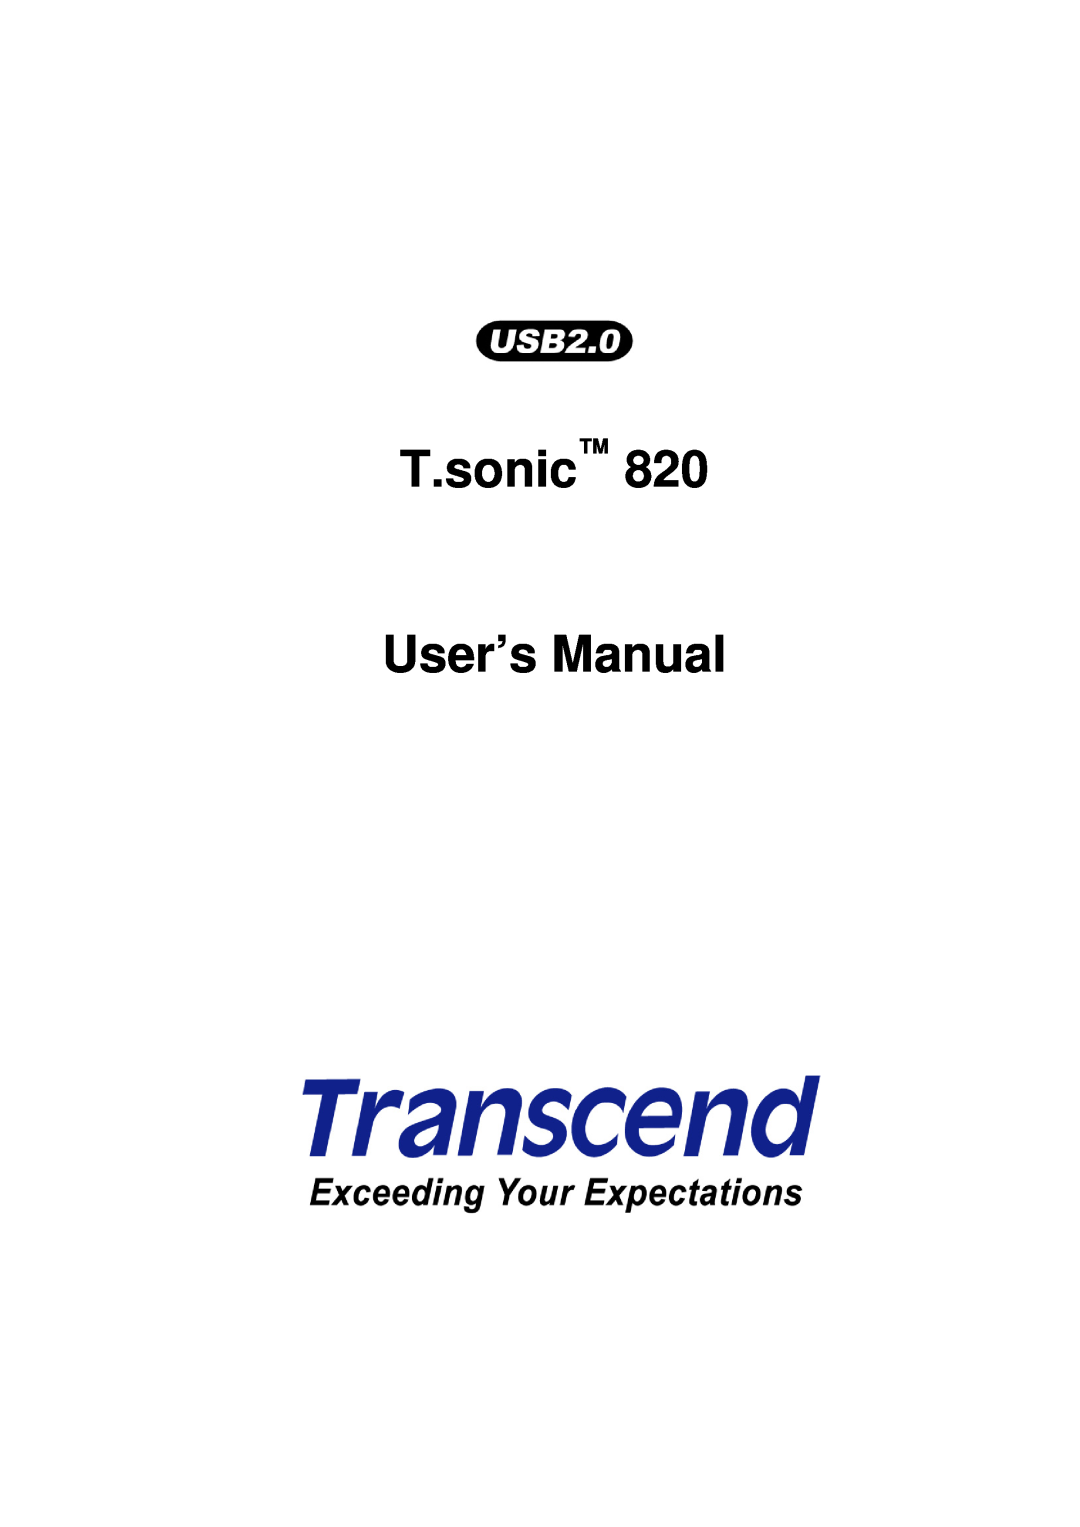 Transcend Information 820 user manual T.sonic User’s Manual 